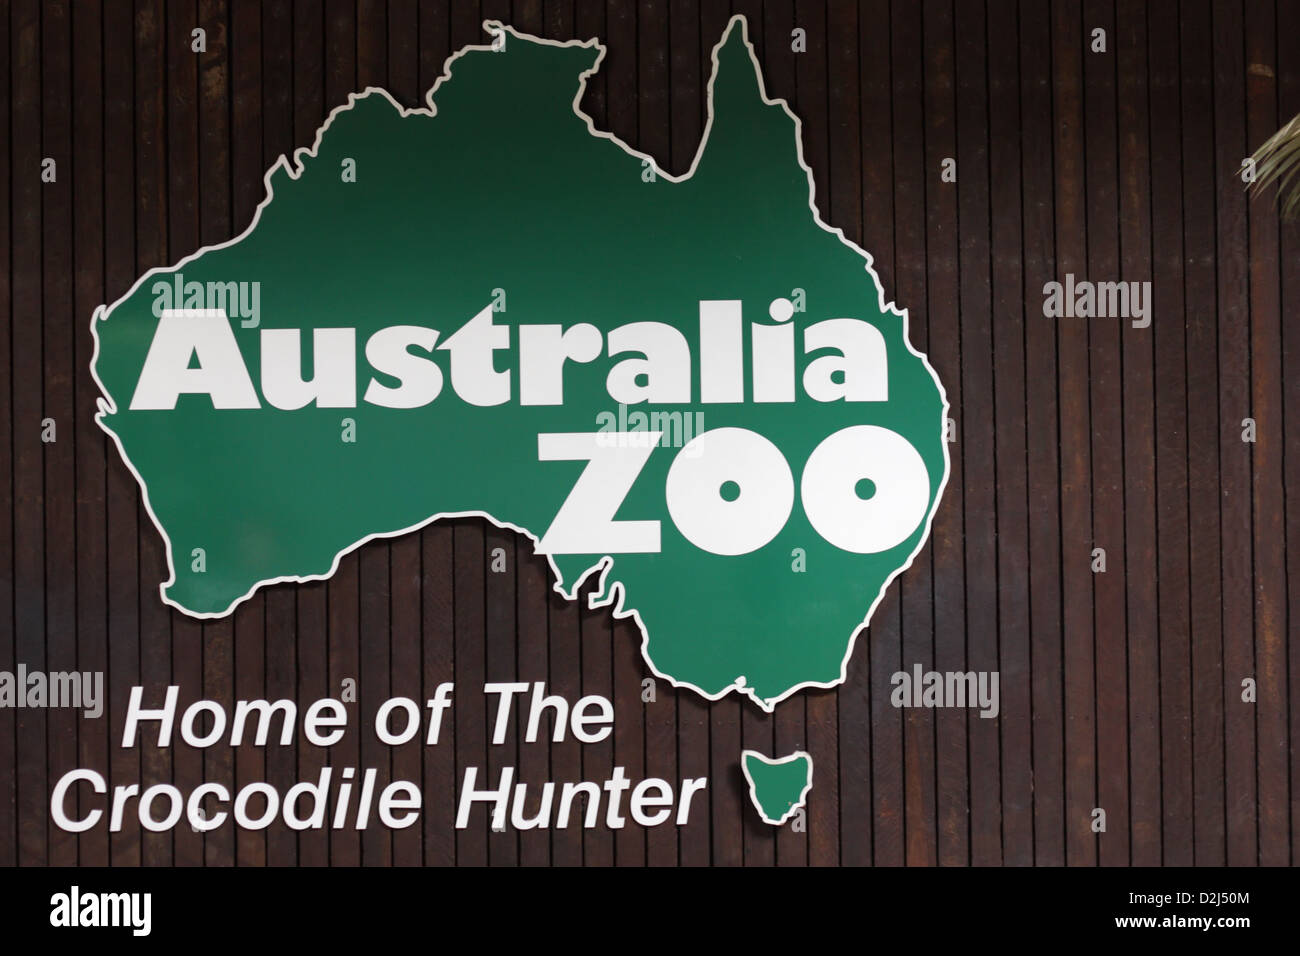 Steve irwin australia zoo hi-res stock photography and images - Alamy